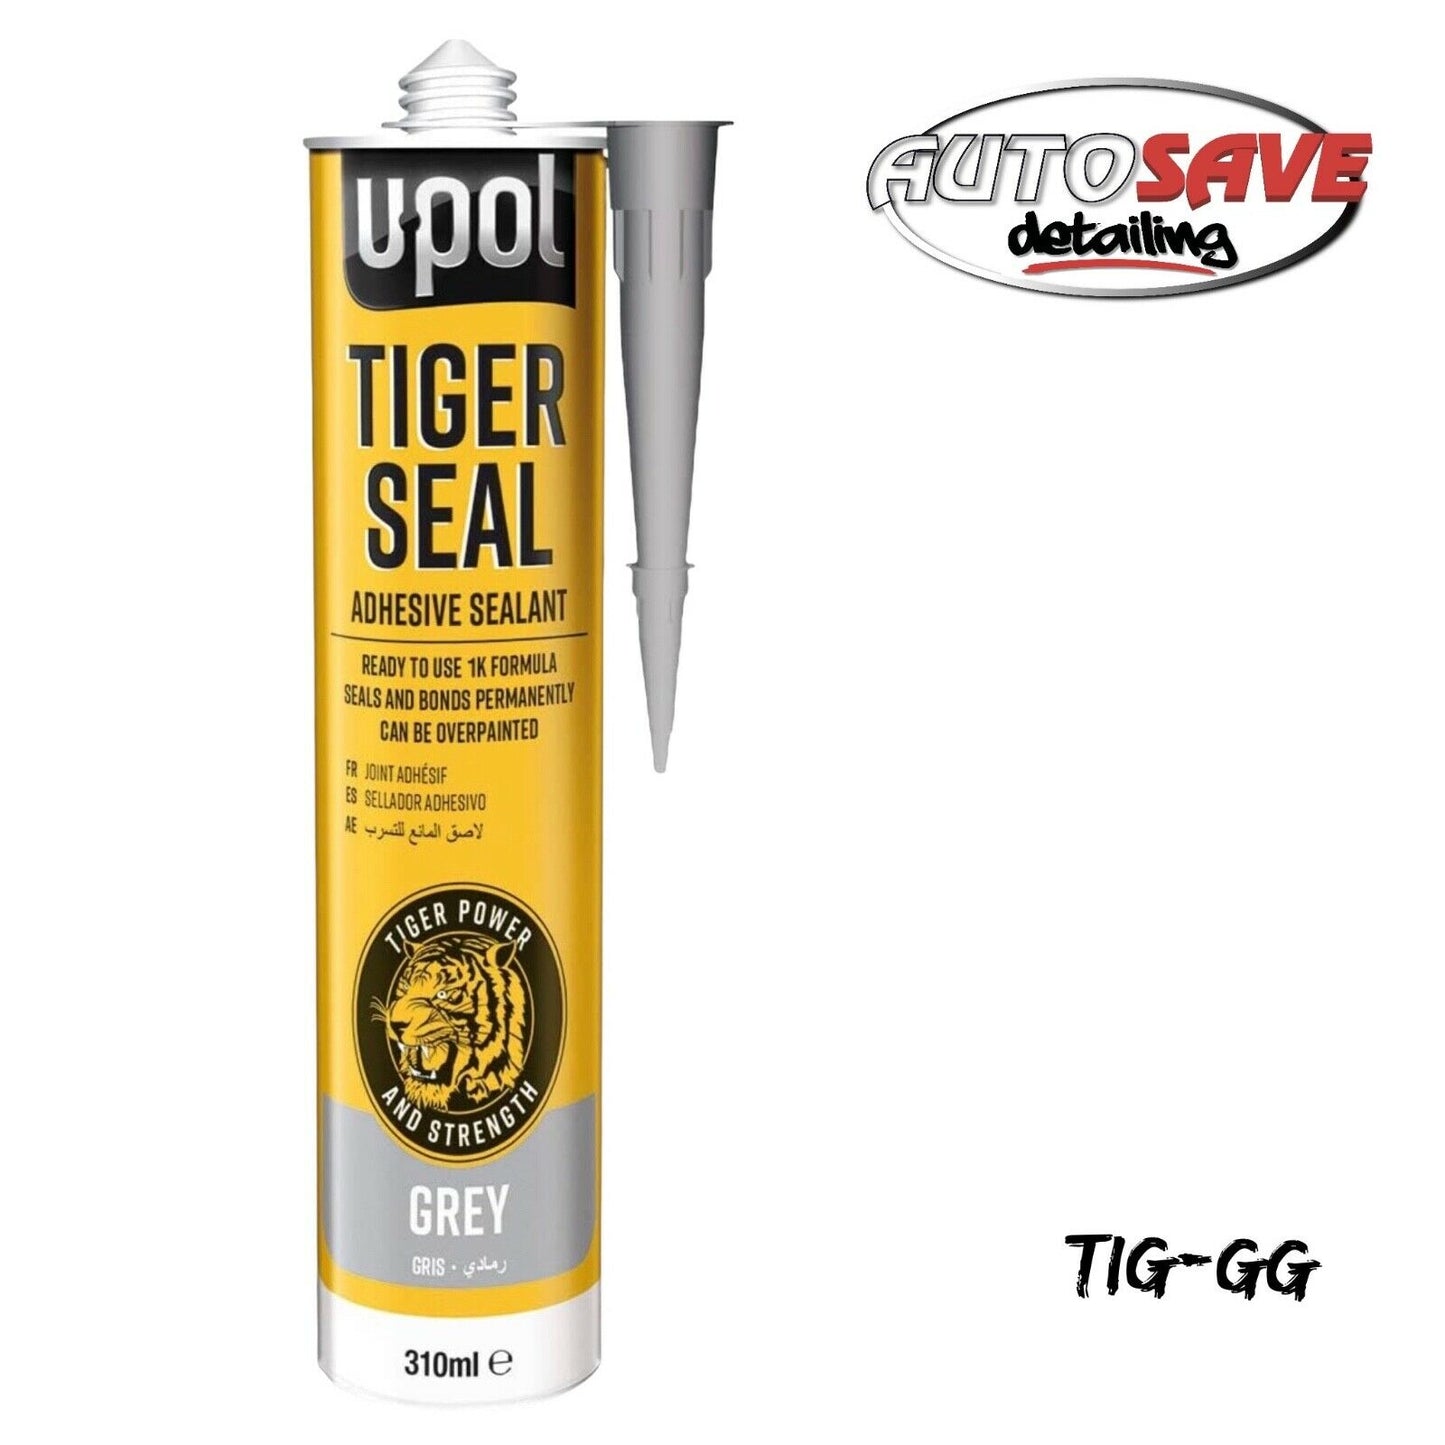 Upol Tiger Seal GREY 310ml Polyurethane Adhesive Sealant TIG/GG New U-POL